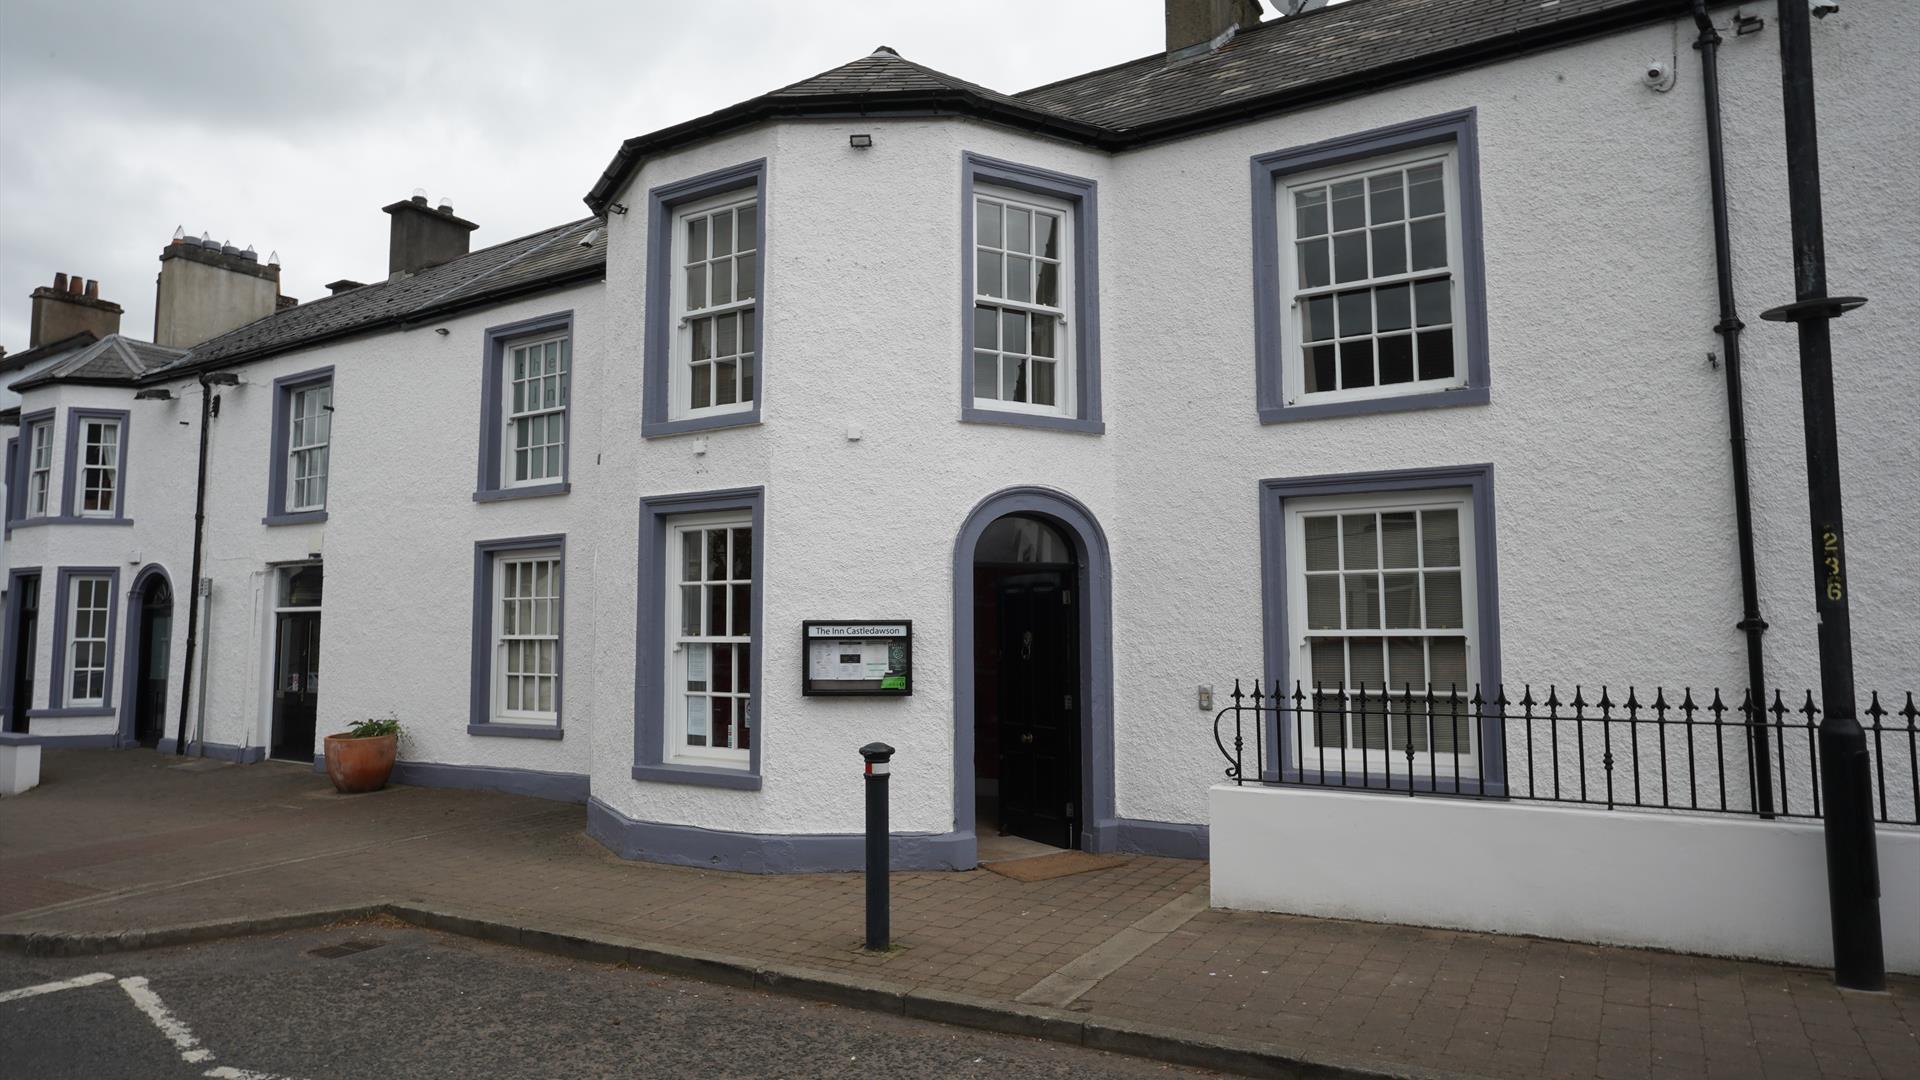 The Inn at Castledawson